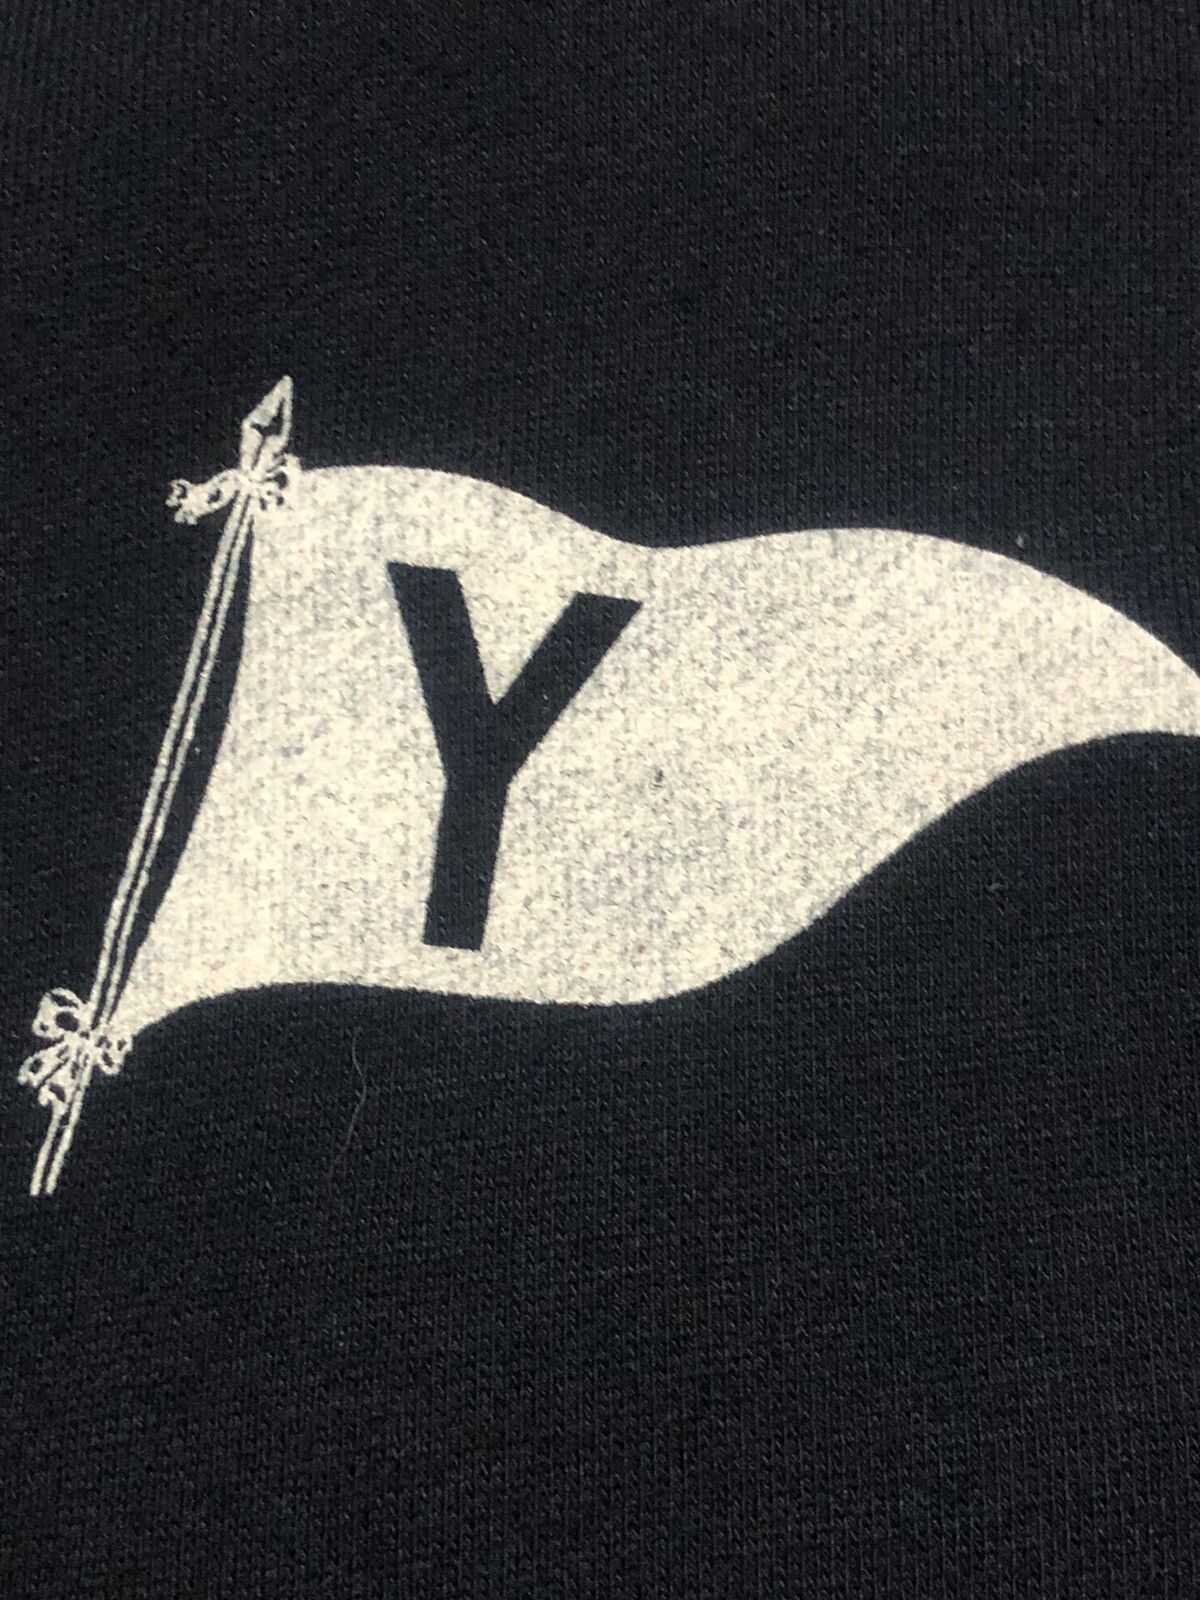 Japanese Brand - Yale University Snap Button Cardigan - 7